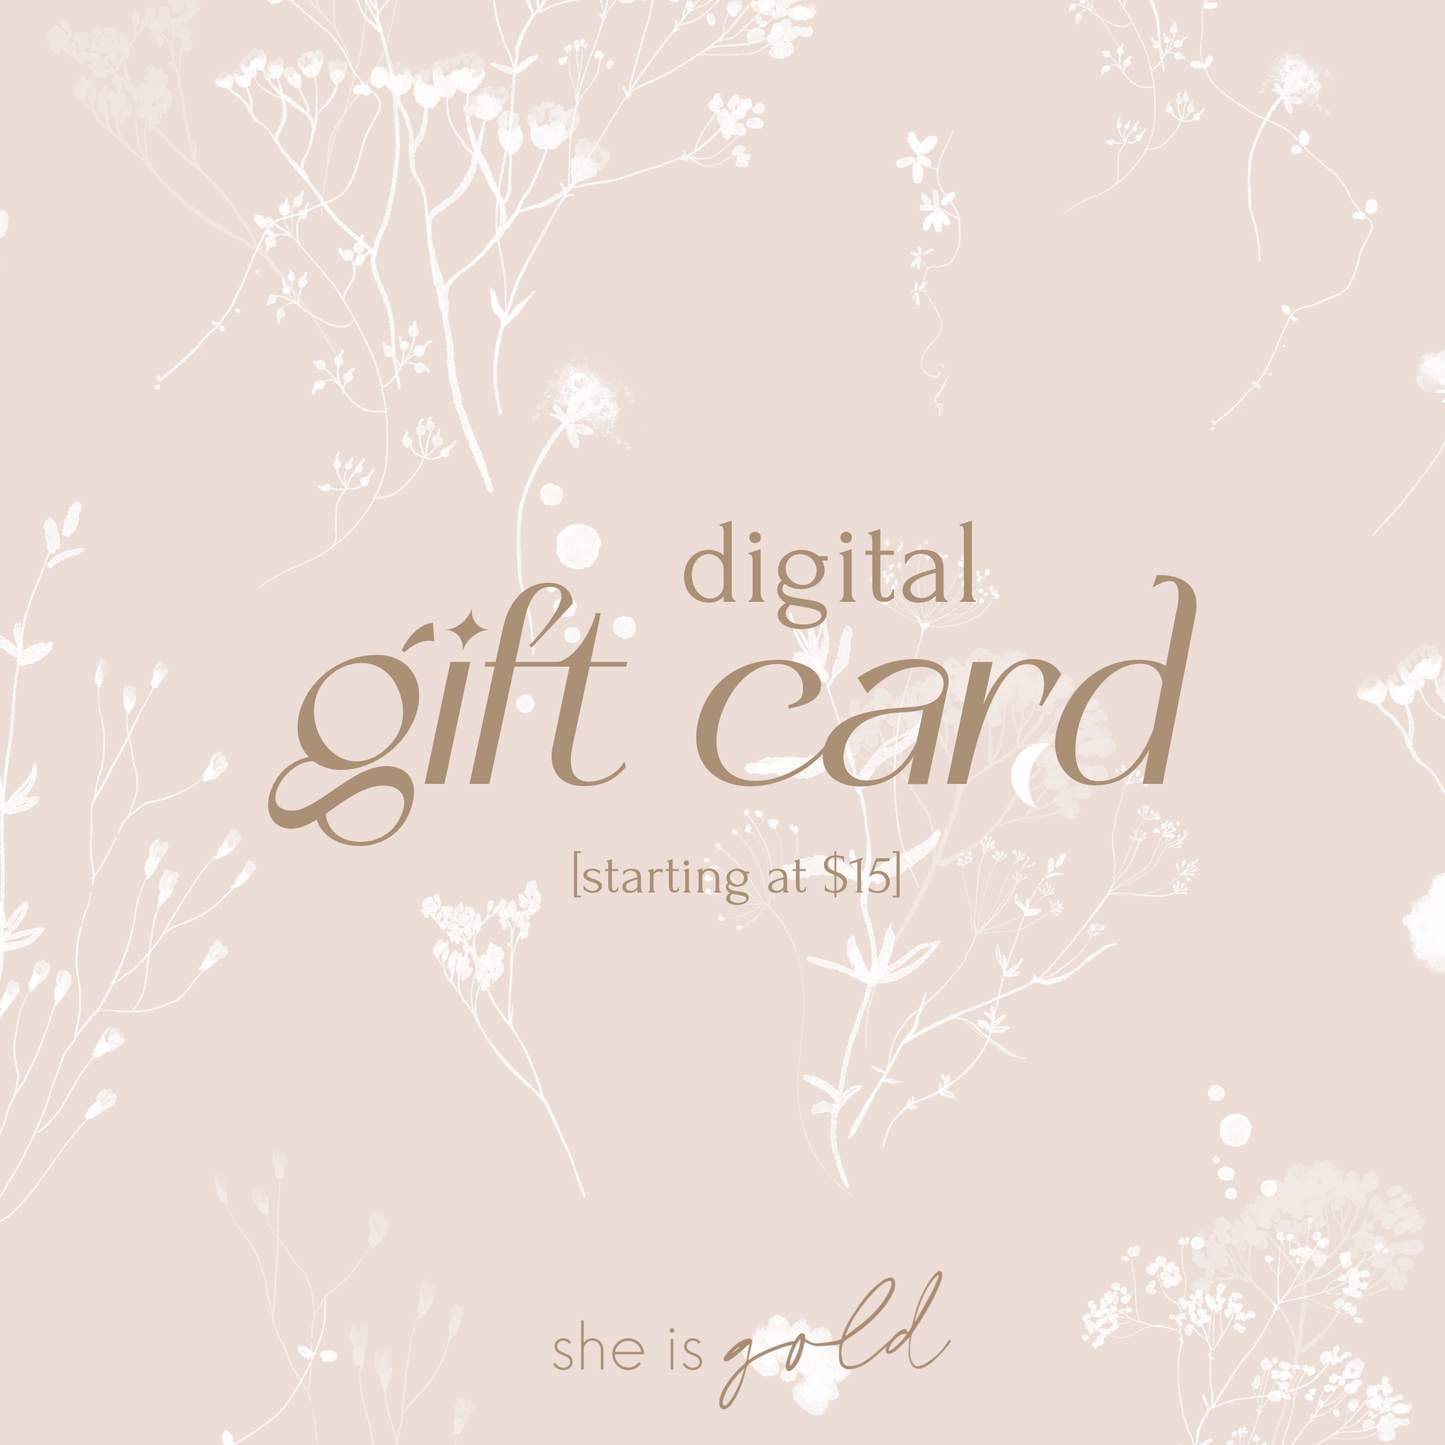 Gift Card - Digital